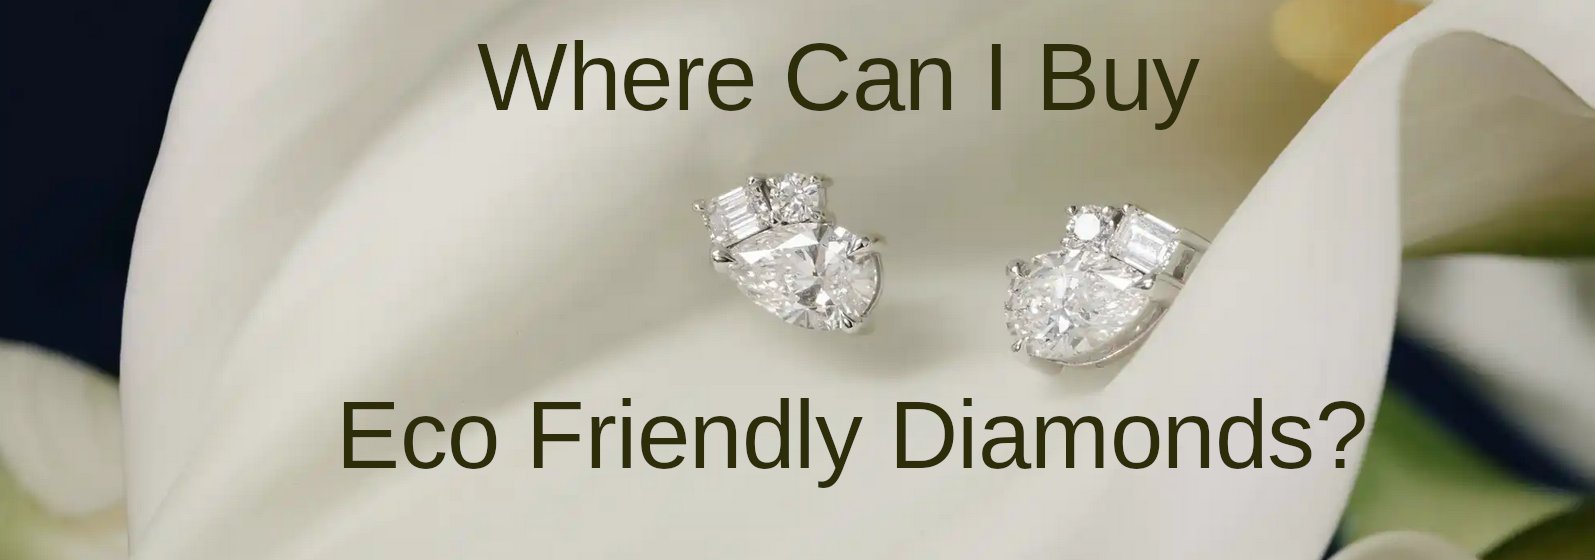 where can I buy eco friendly diamonds?